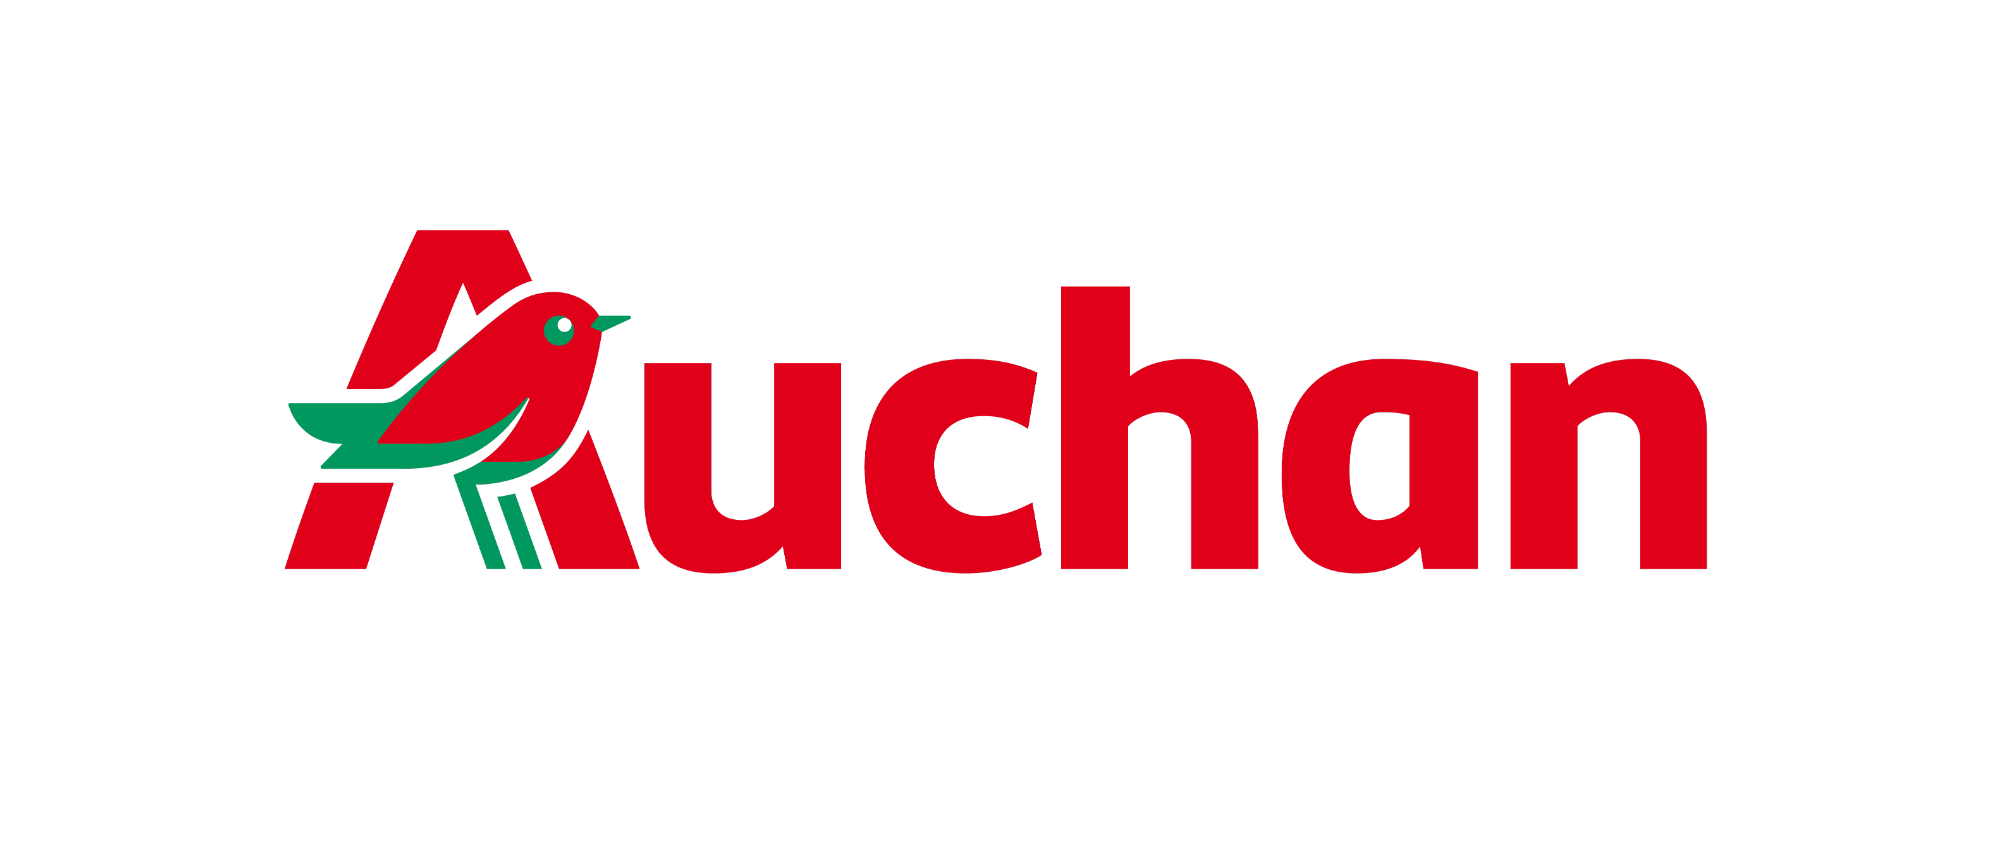 Auchan está a recrutar no Algarve